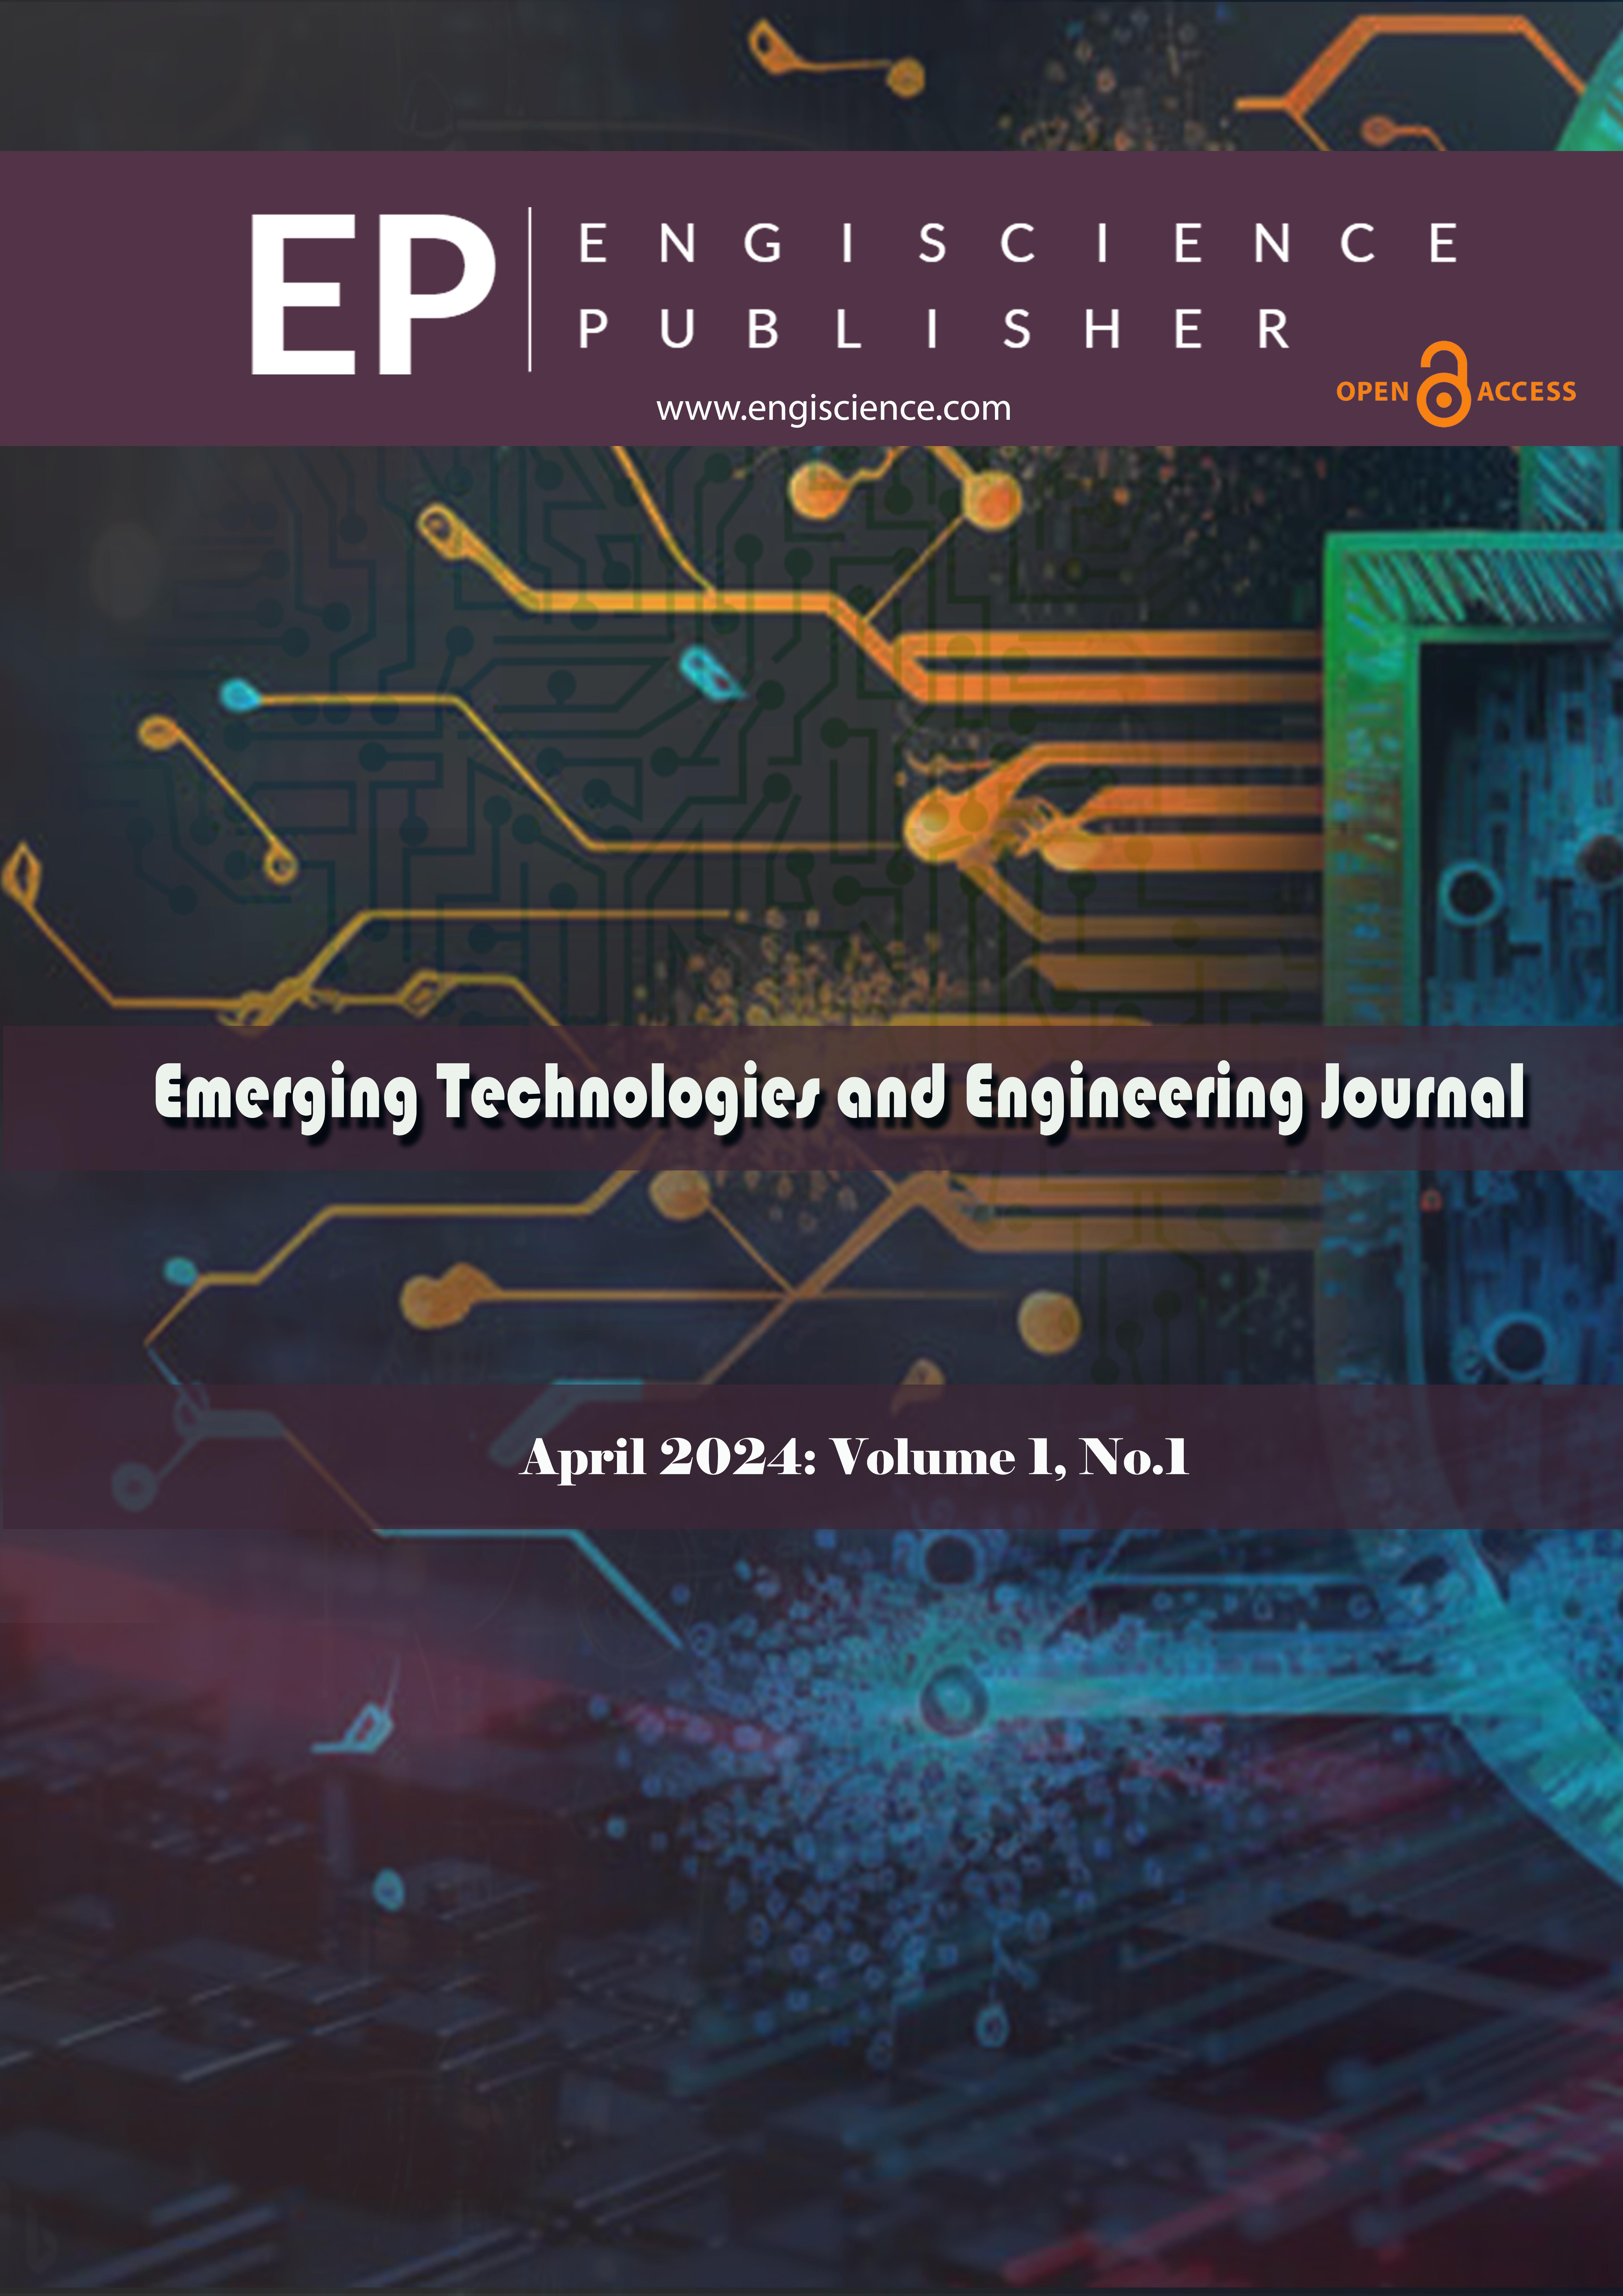 merging Technologies and Engineering Journal (ETEJ)